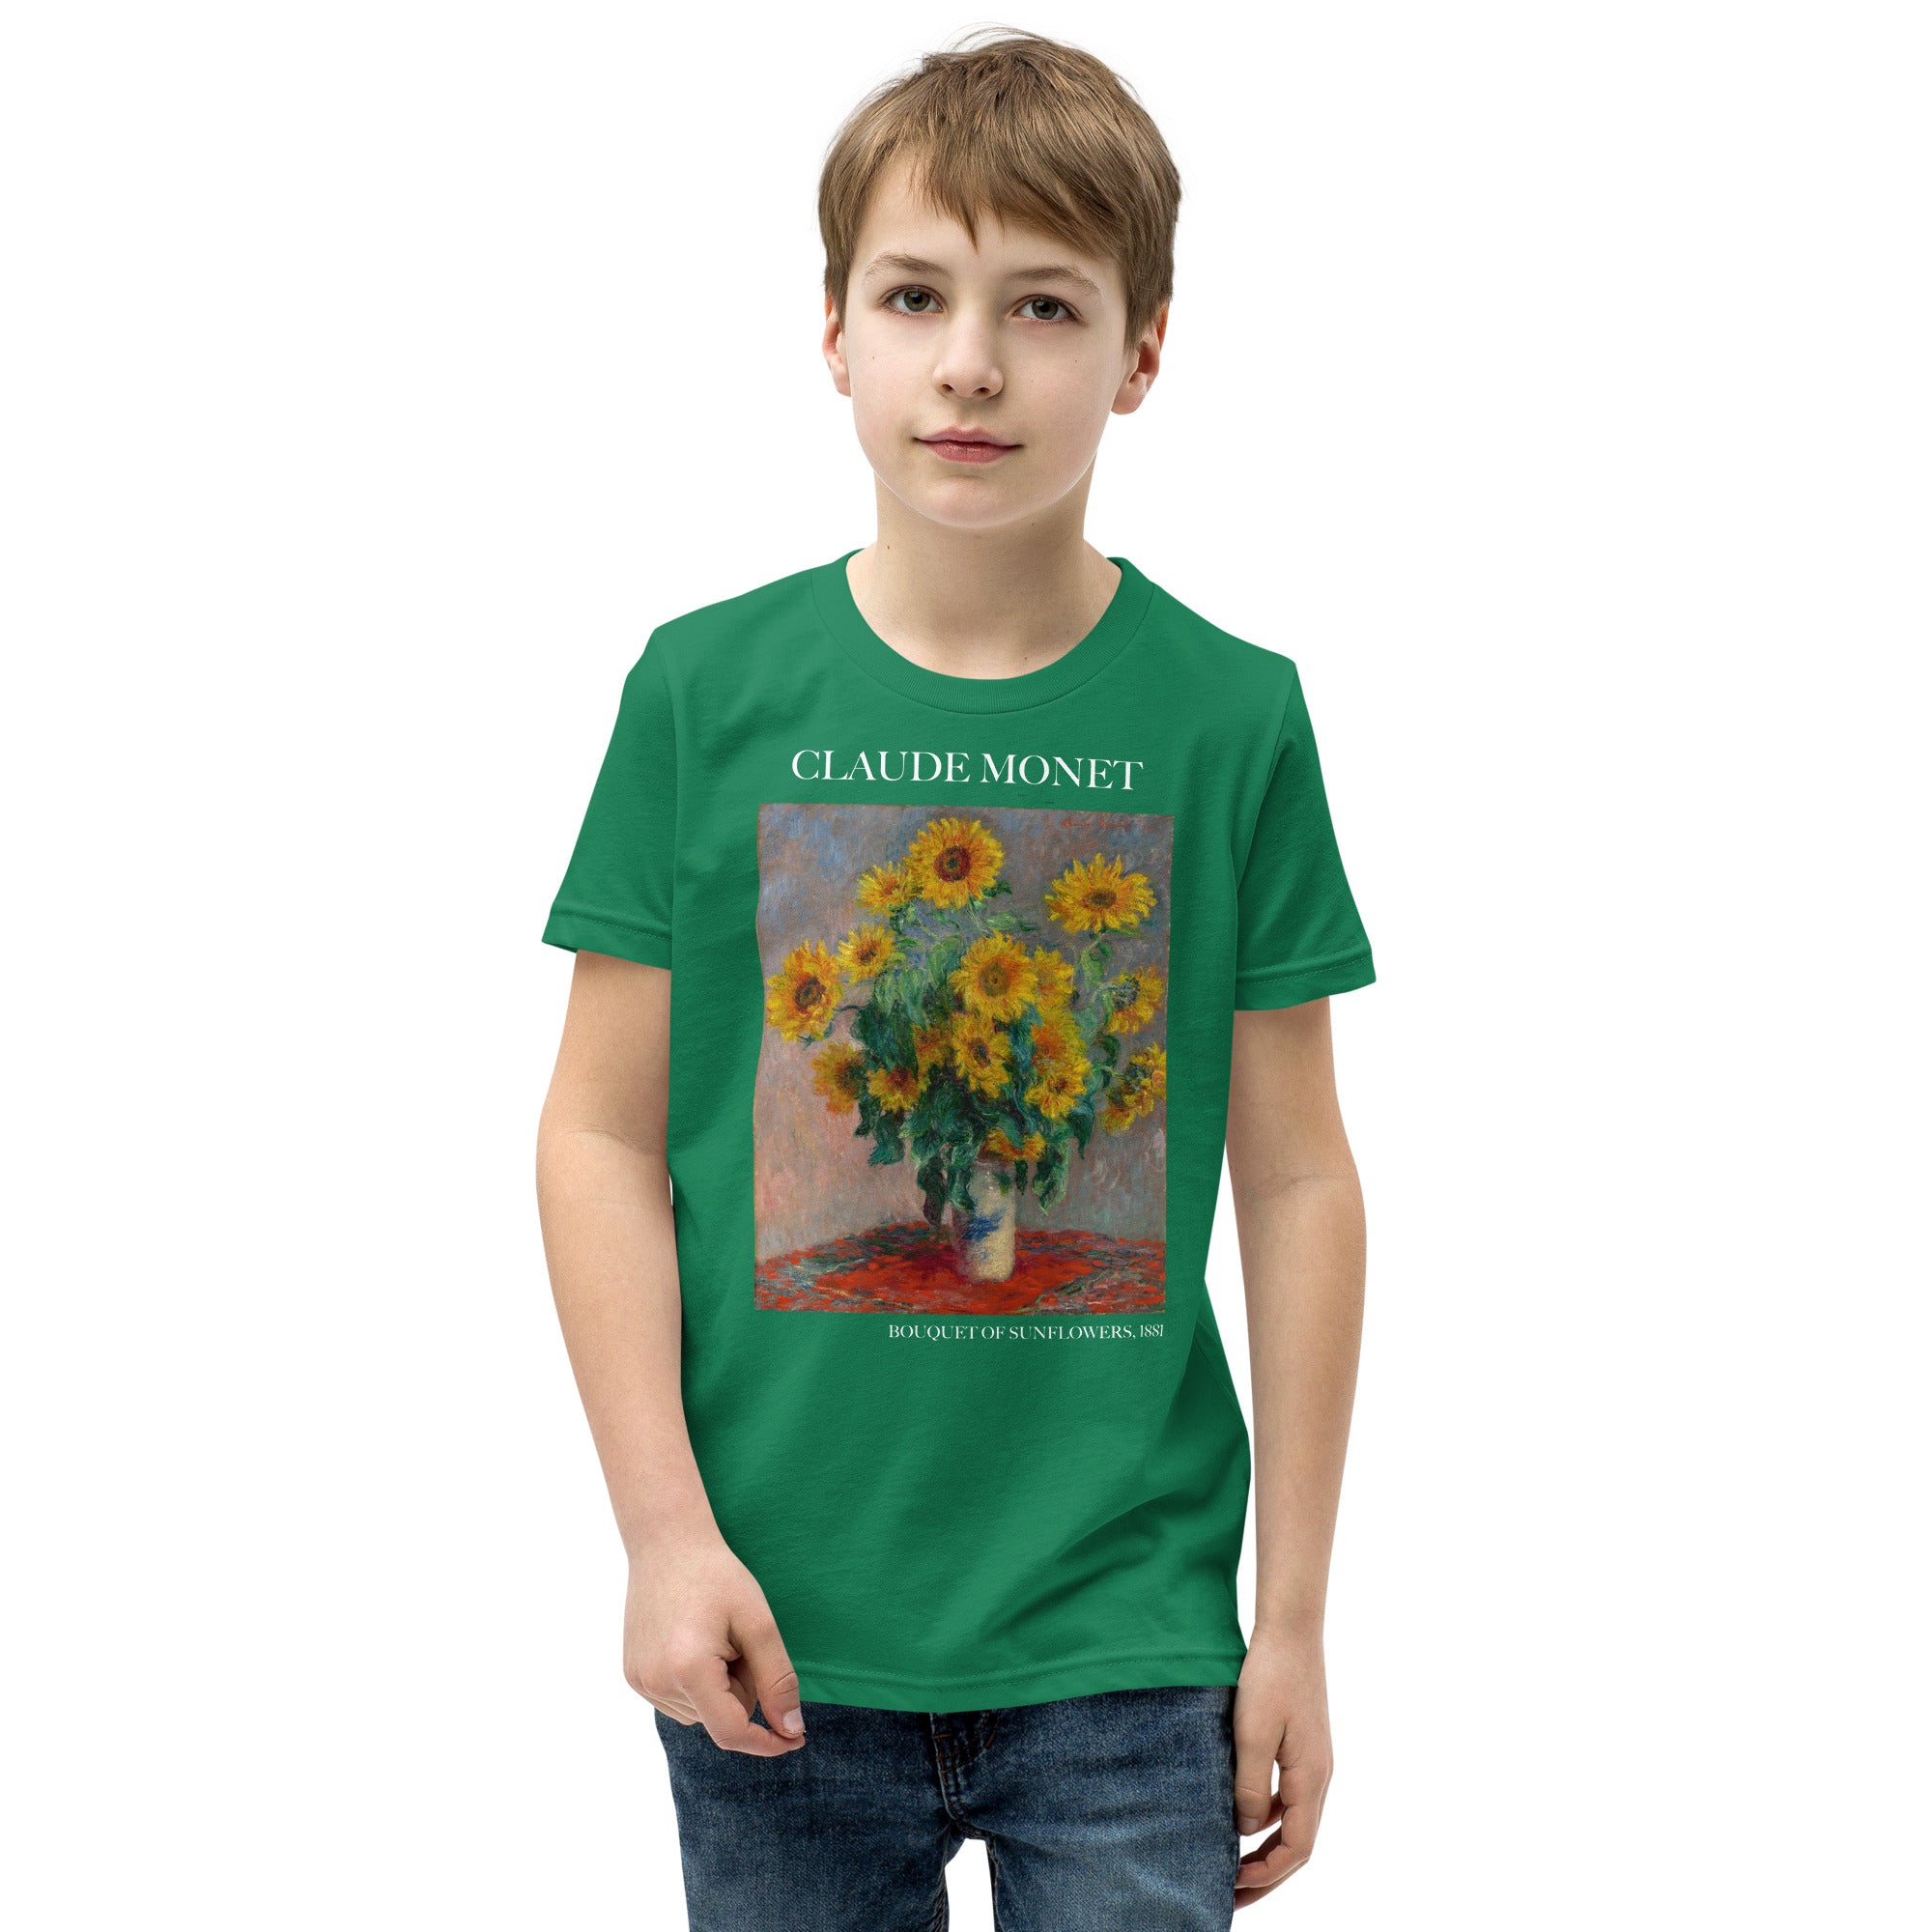 Claude Monet 'Bouquet of Sunflowers' Famous Painting Short Sleeve T-Shirt | Premium Youth Art Tee